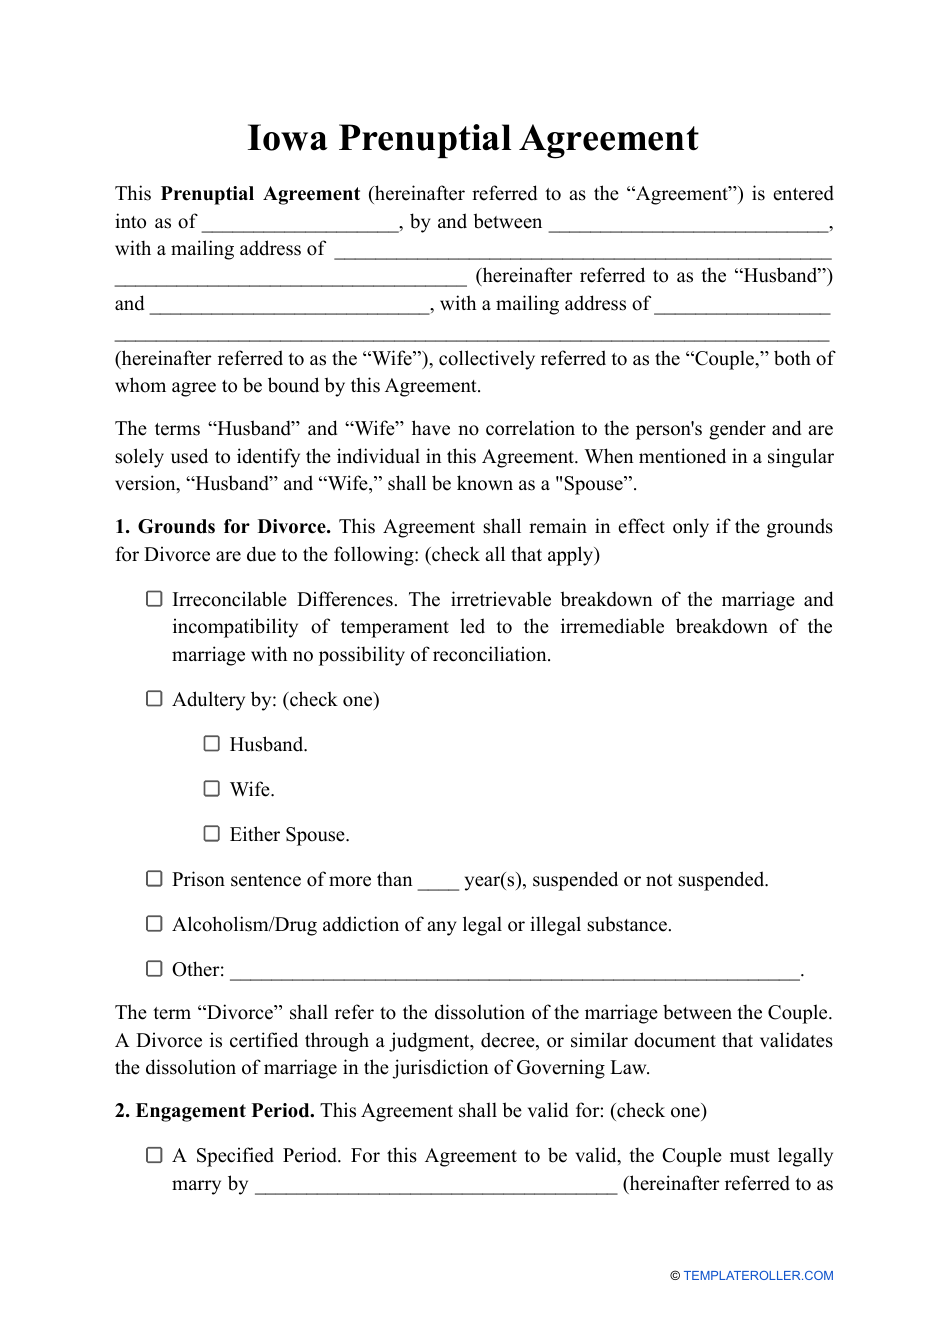 Prenuptial Agreement Template - Iowa, Page 1